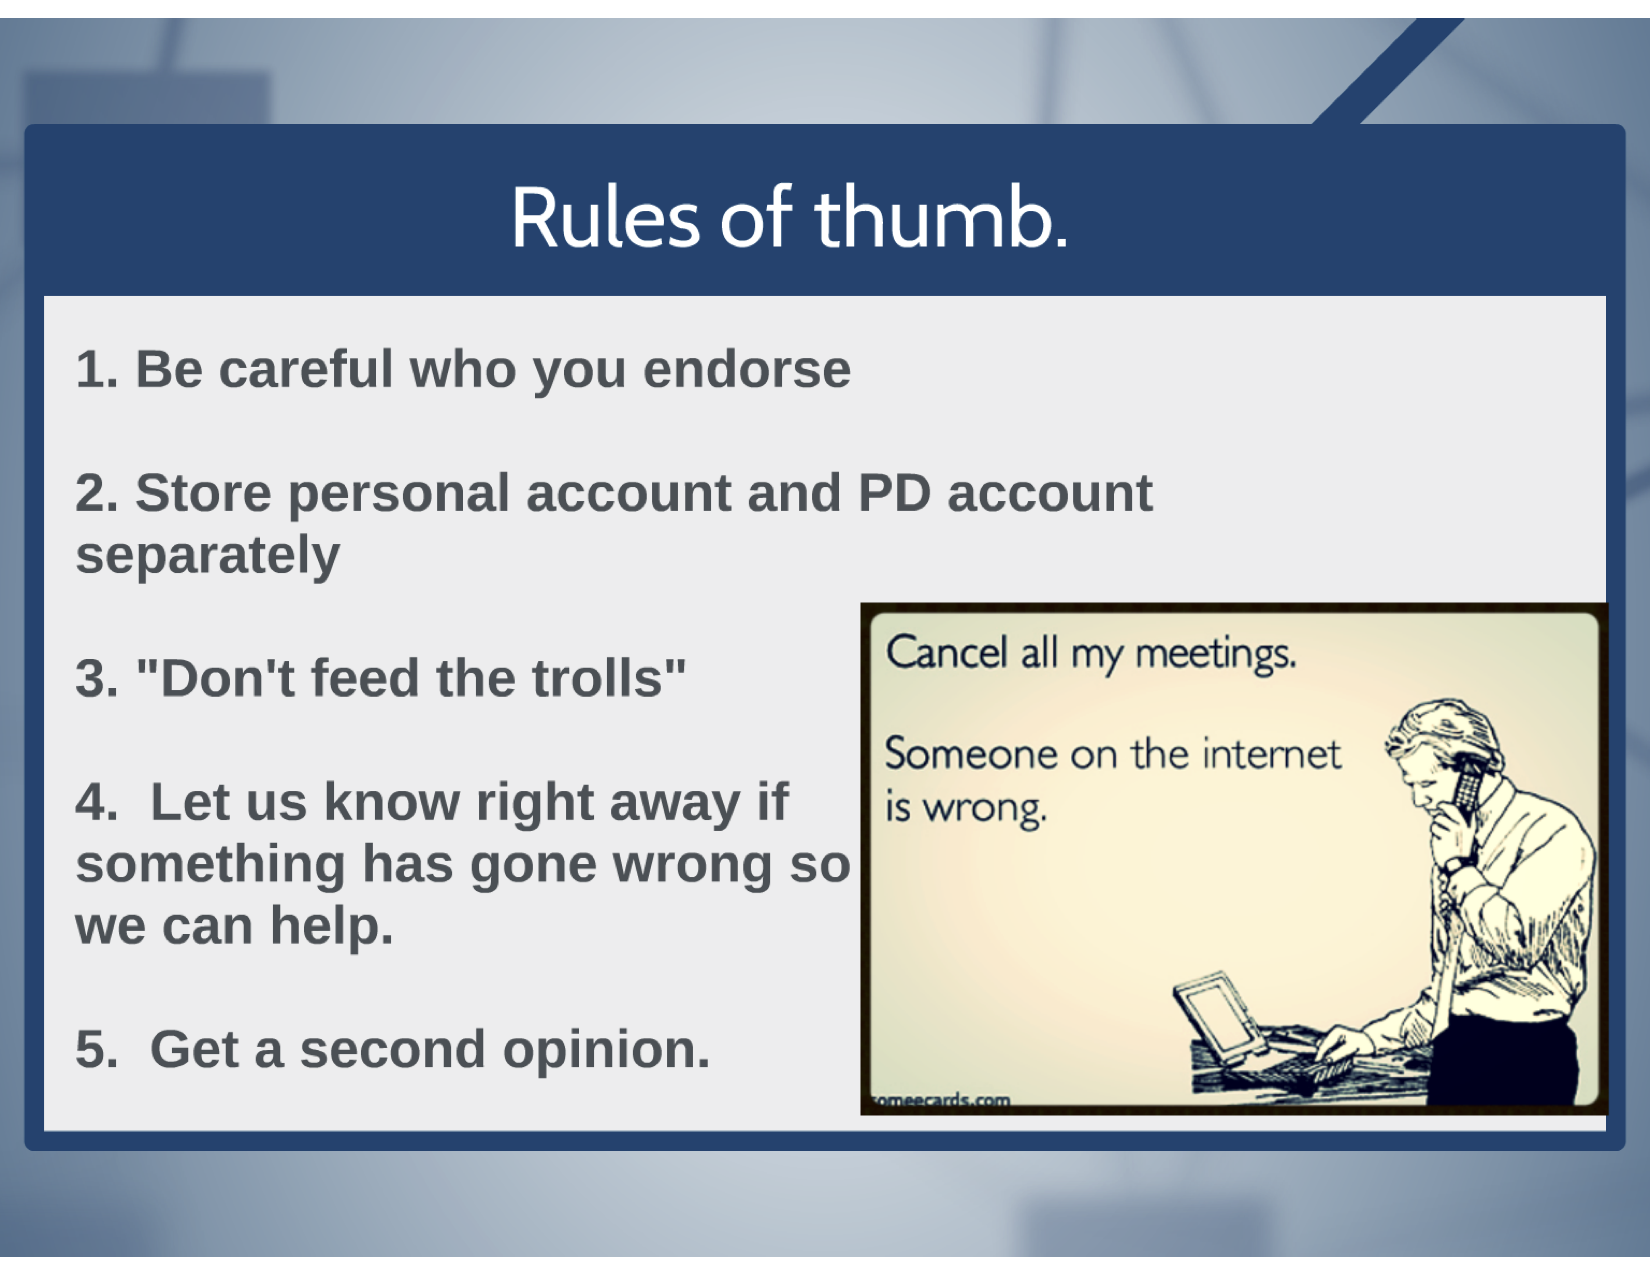 Twitter rules of thumb.